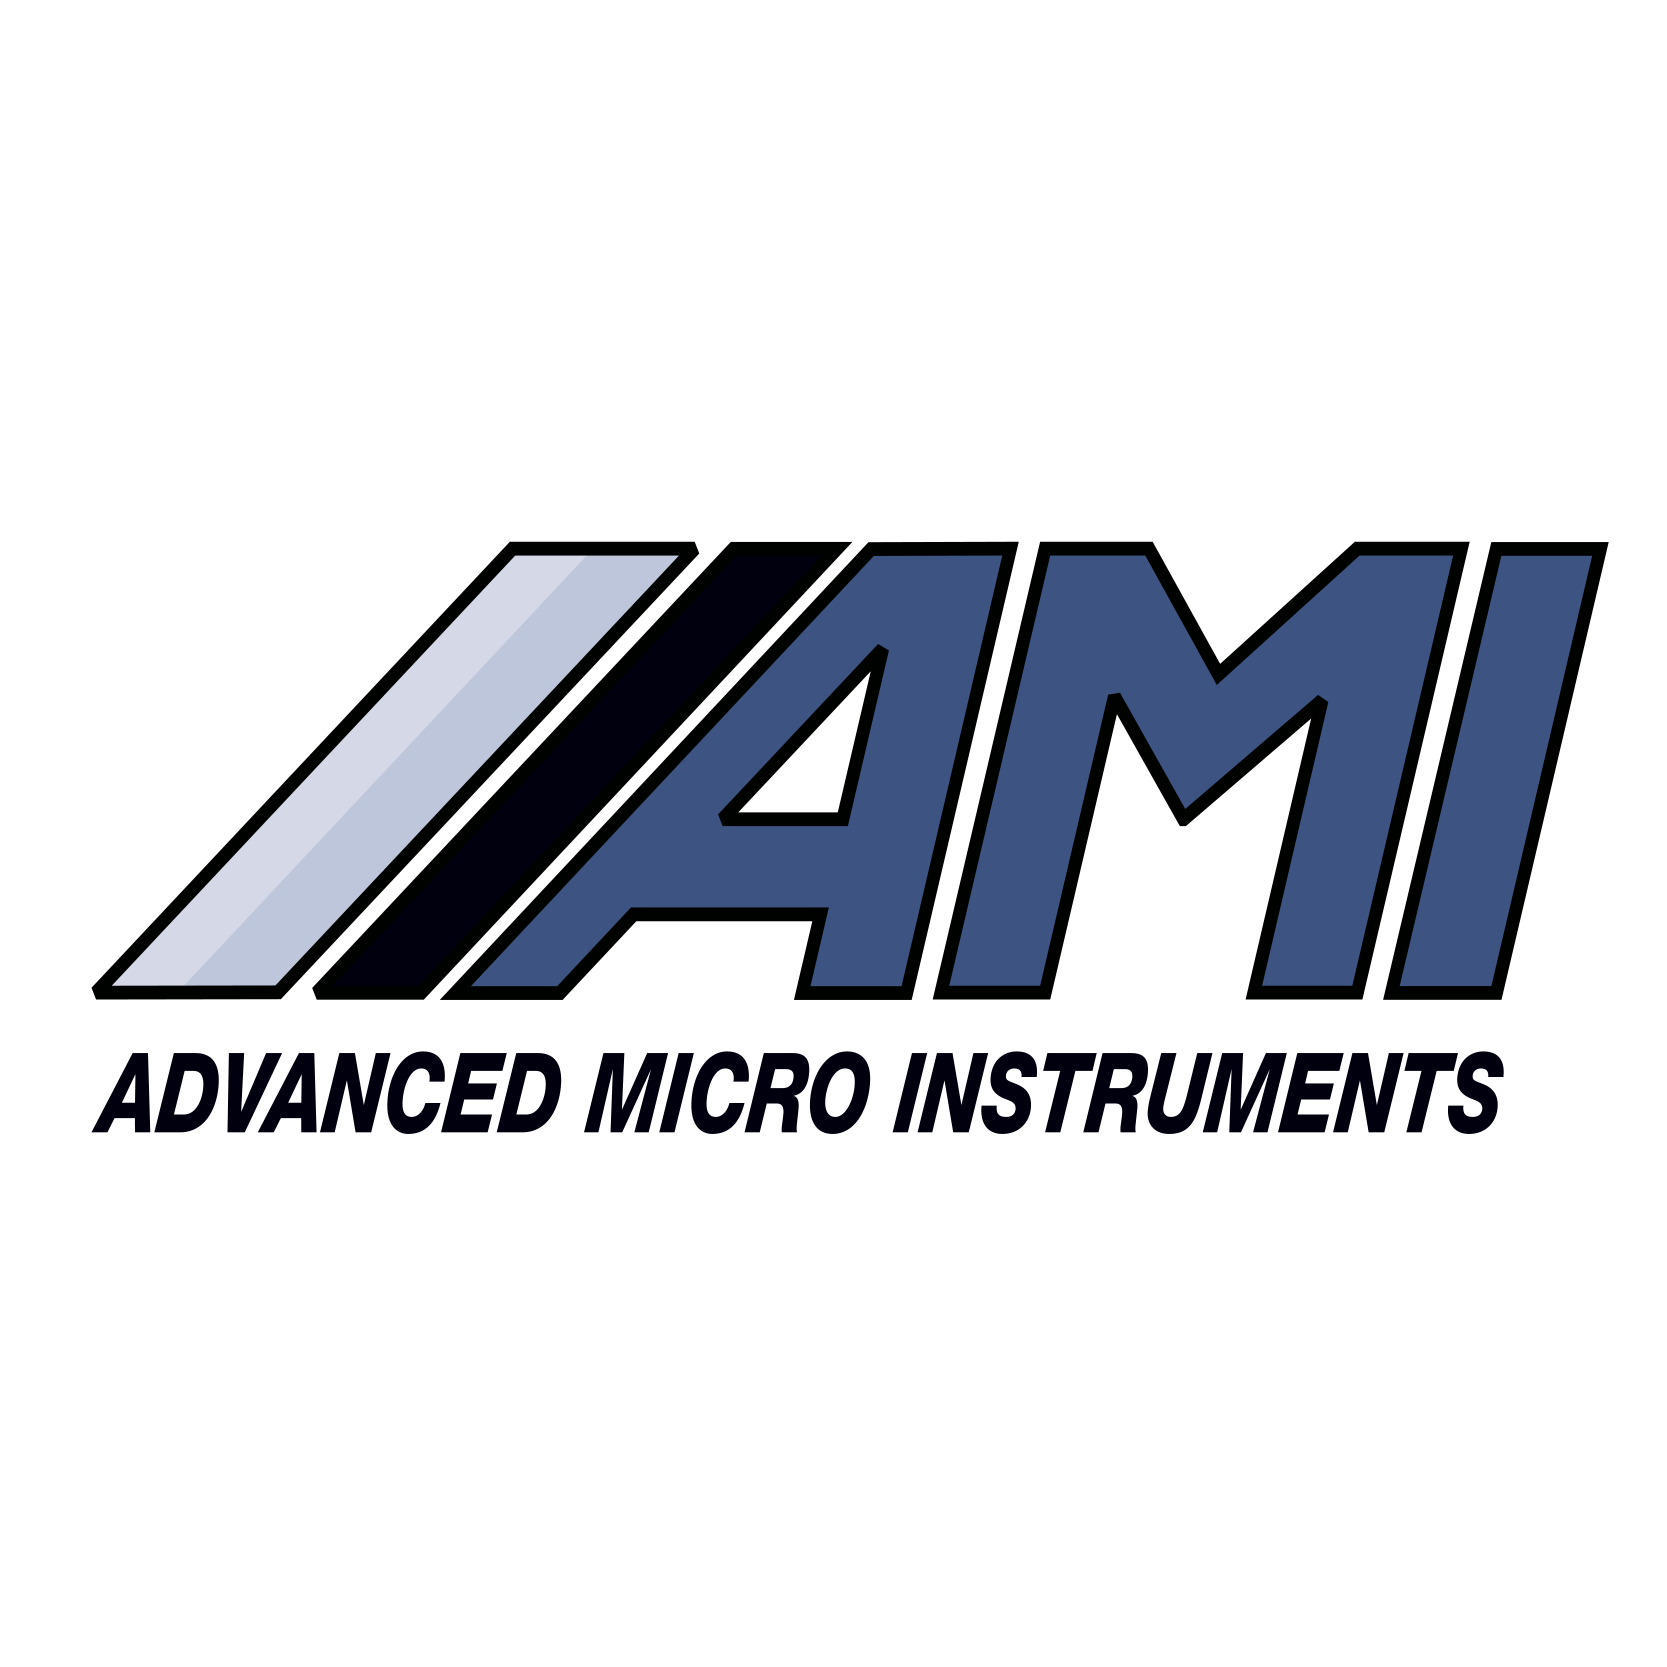 AMI - Advanced Micro Instruments